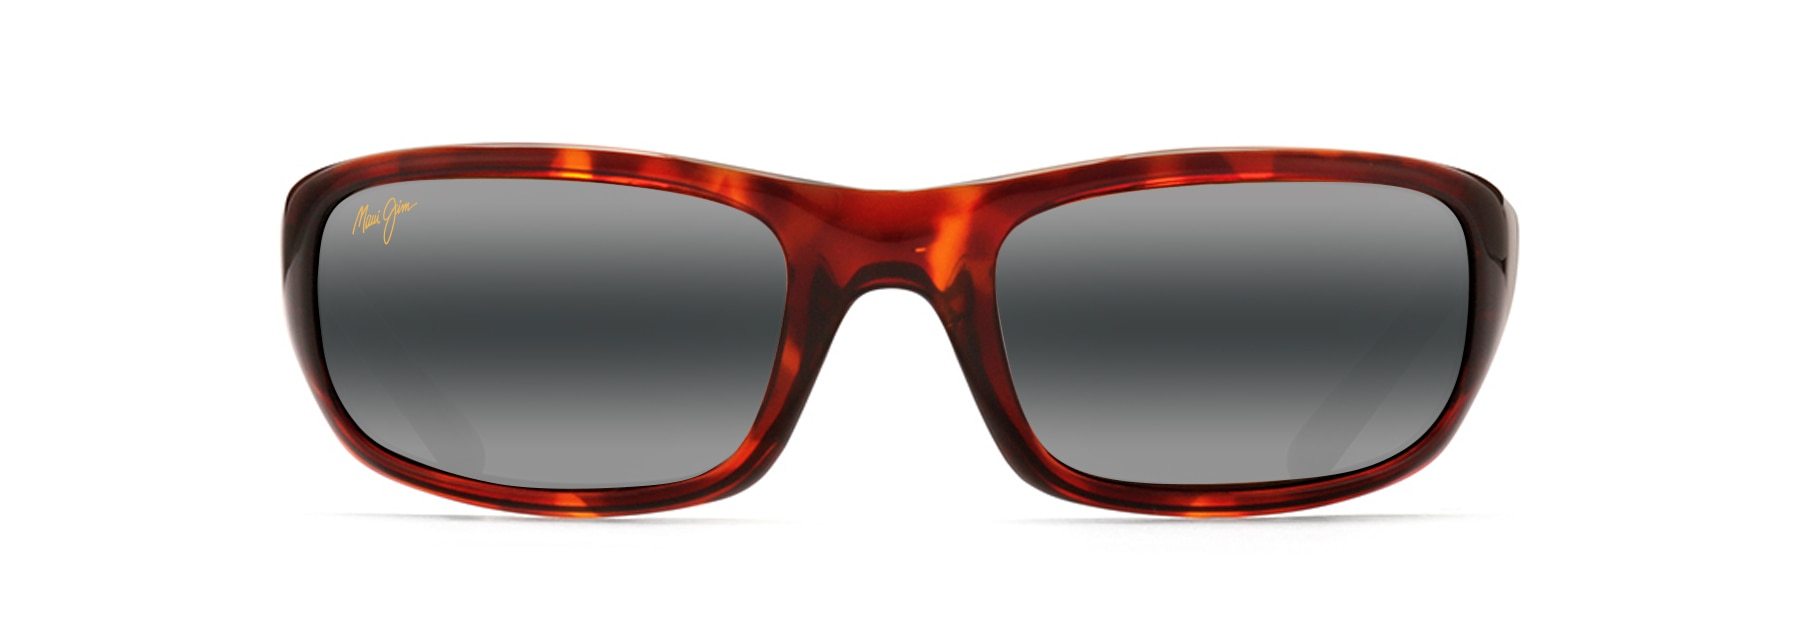 MyMaui Stingray MM103-009 Sunglasses